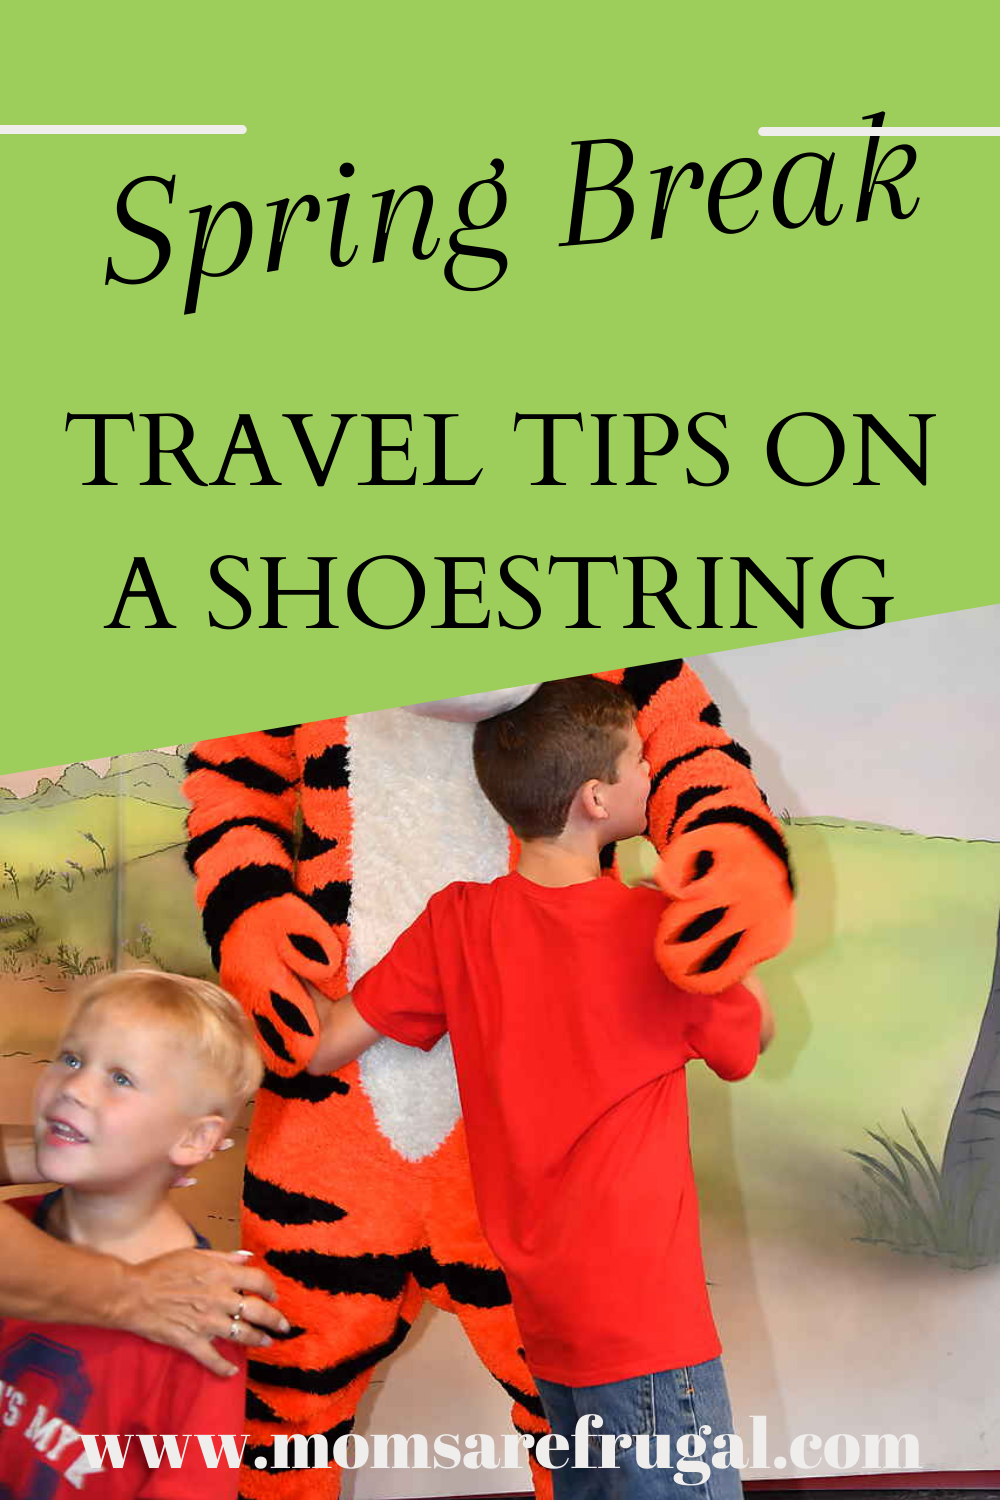 Spring Break Travel Tips on a Shoestring